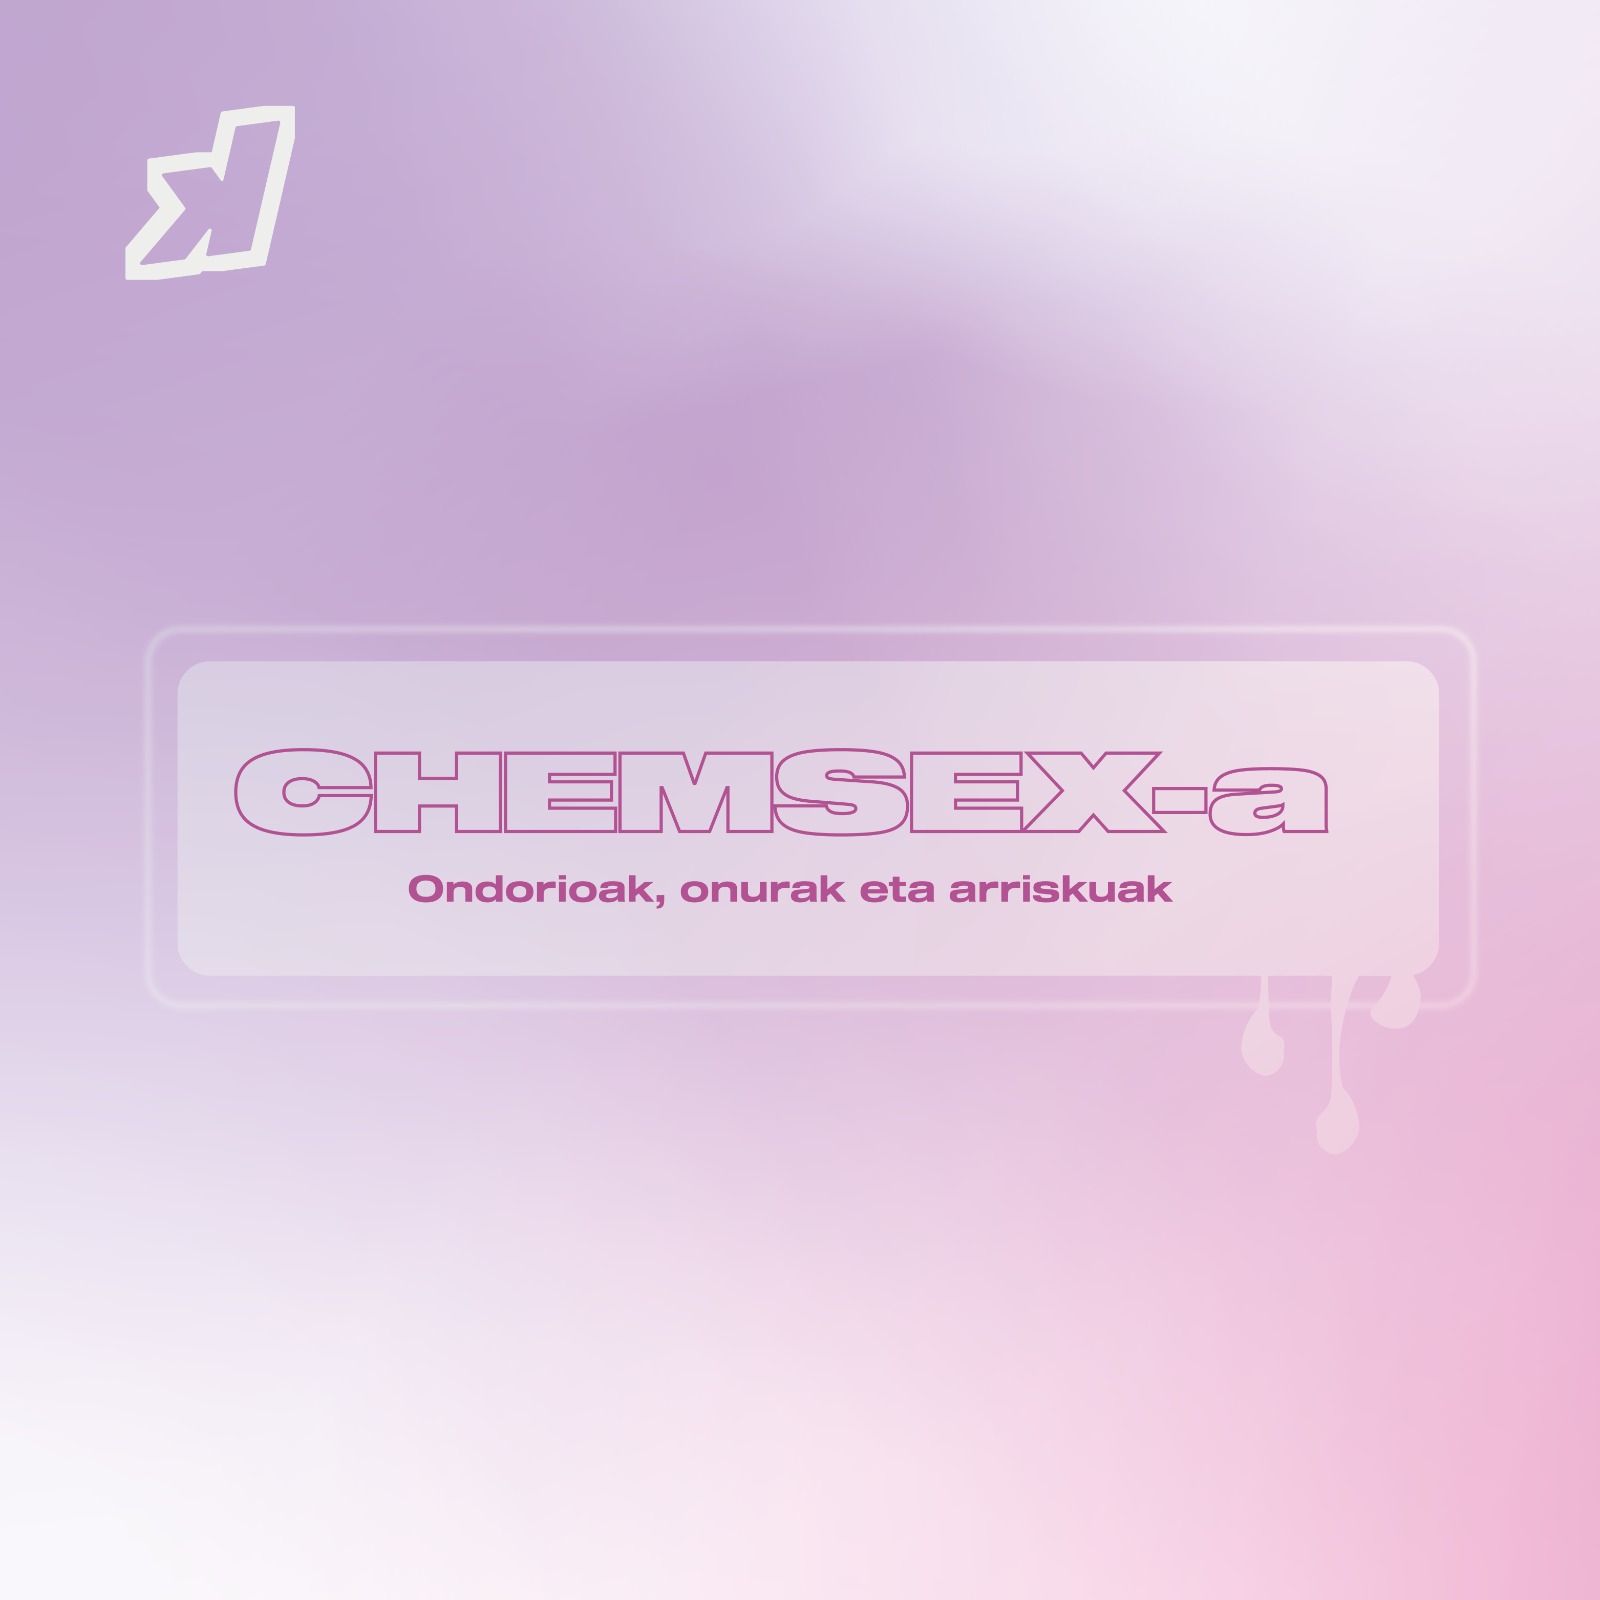 HEZE – CHEMSEX-A